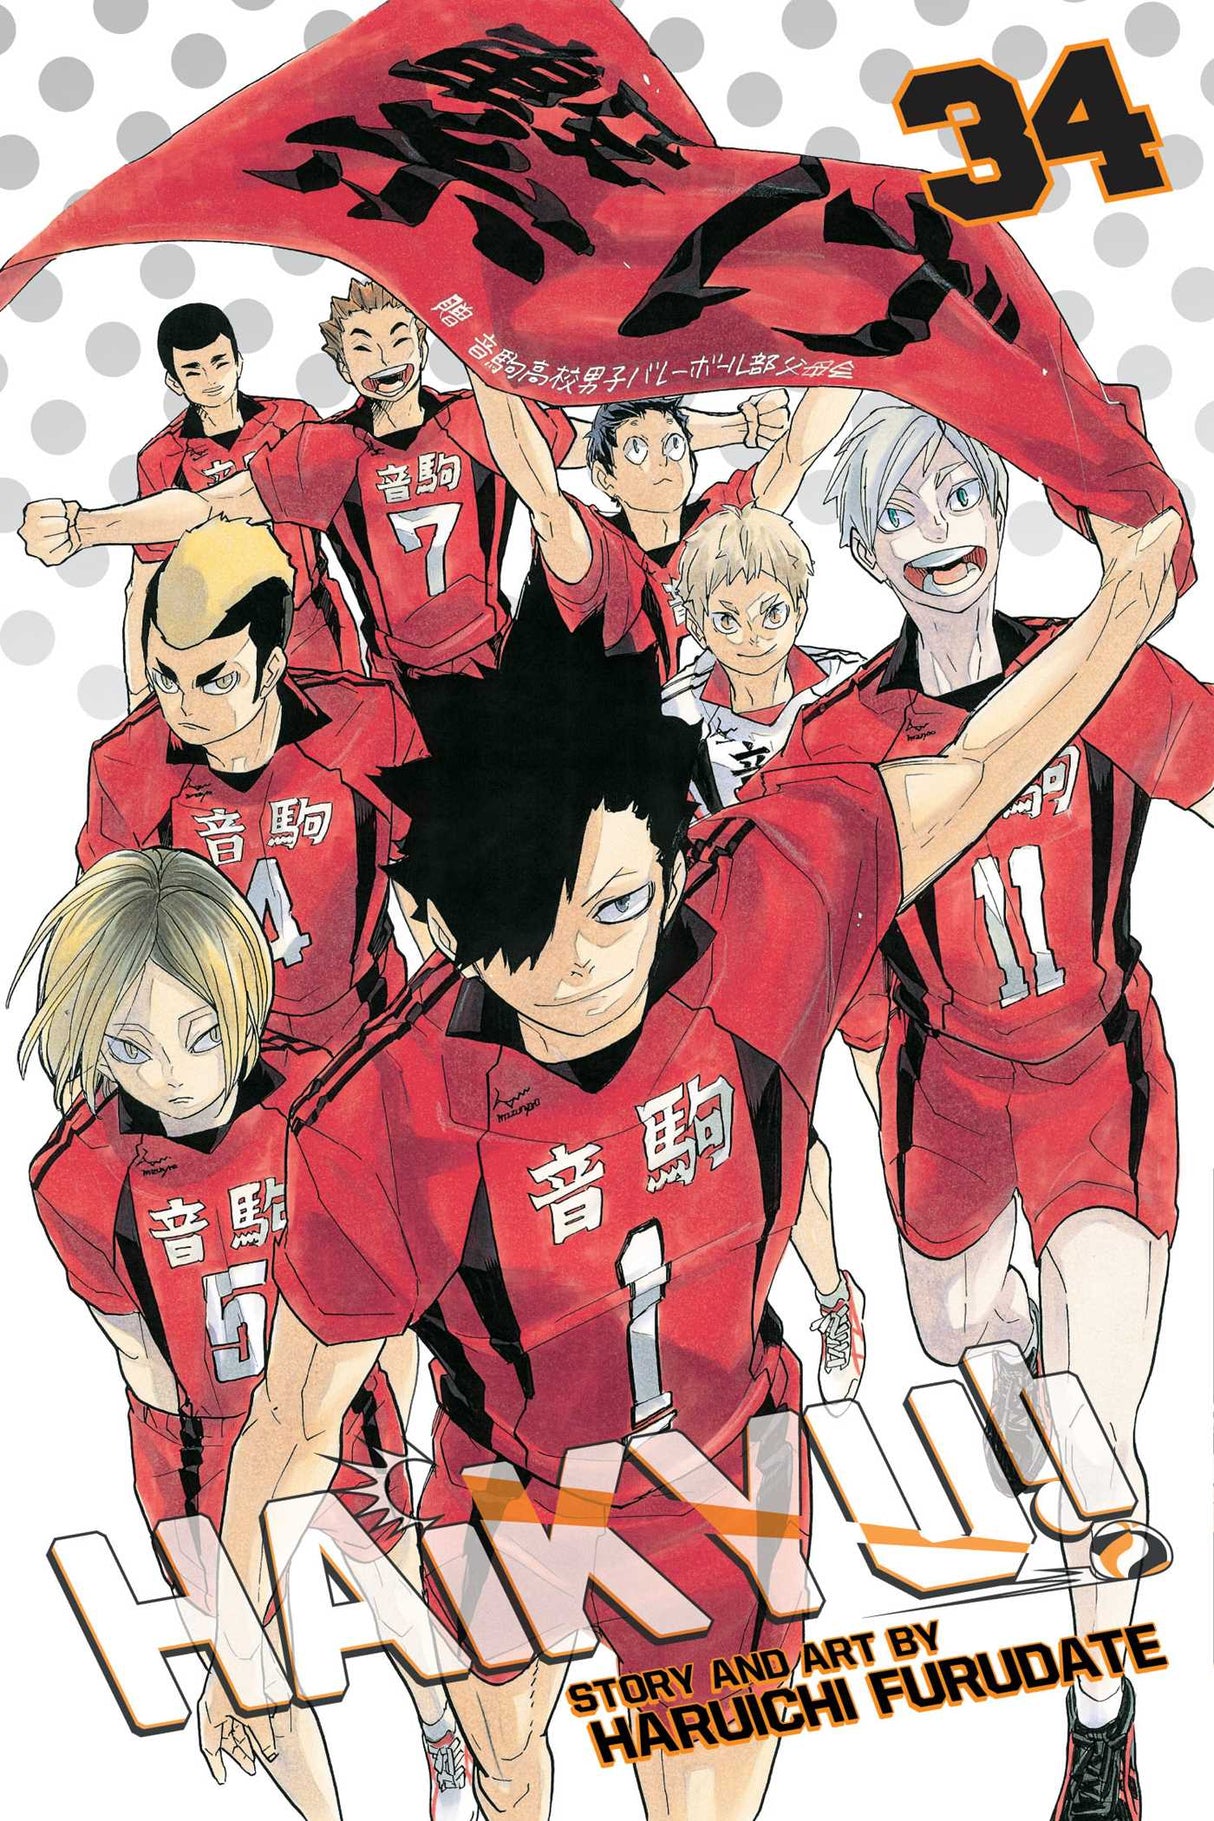 Cover image of the Manga Haikyu!!, Vol. 34